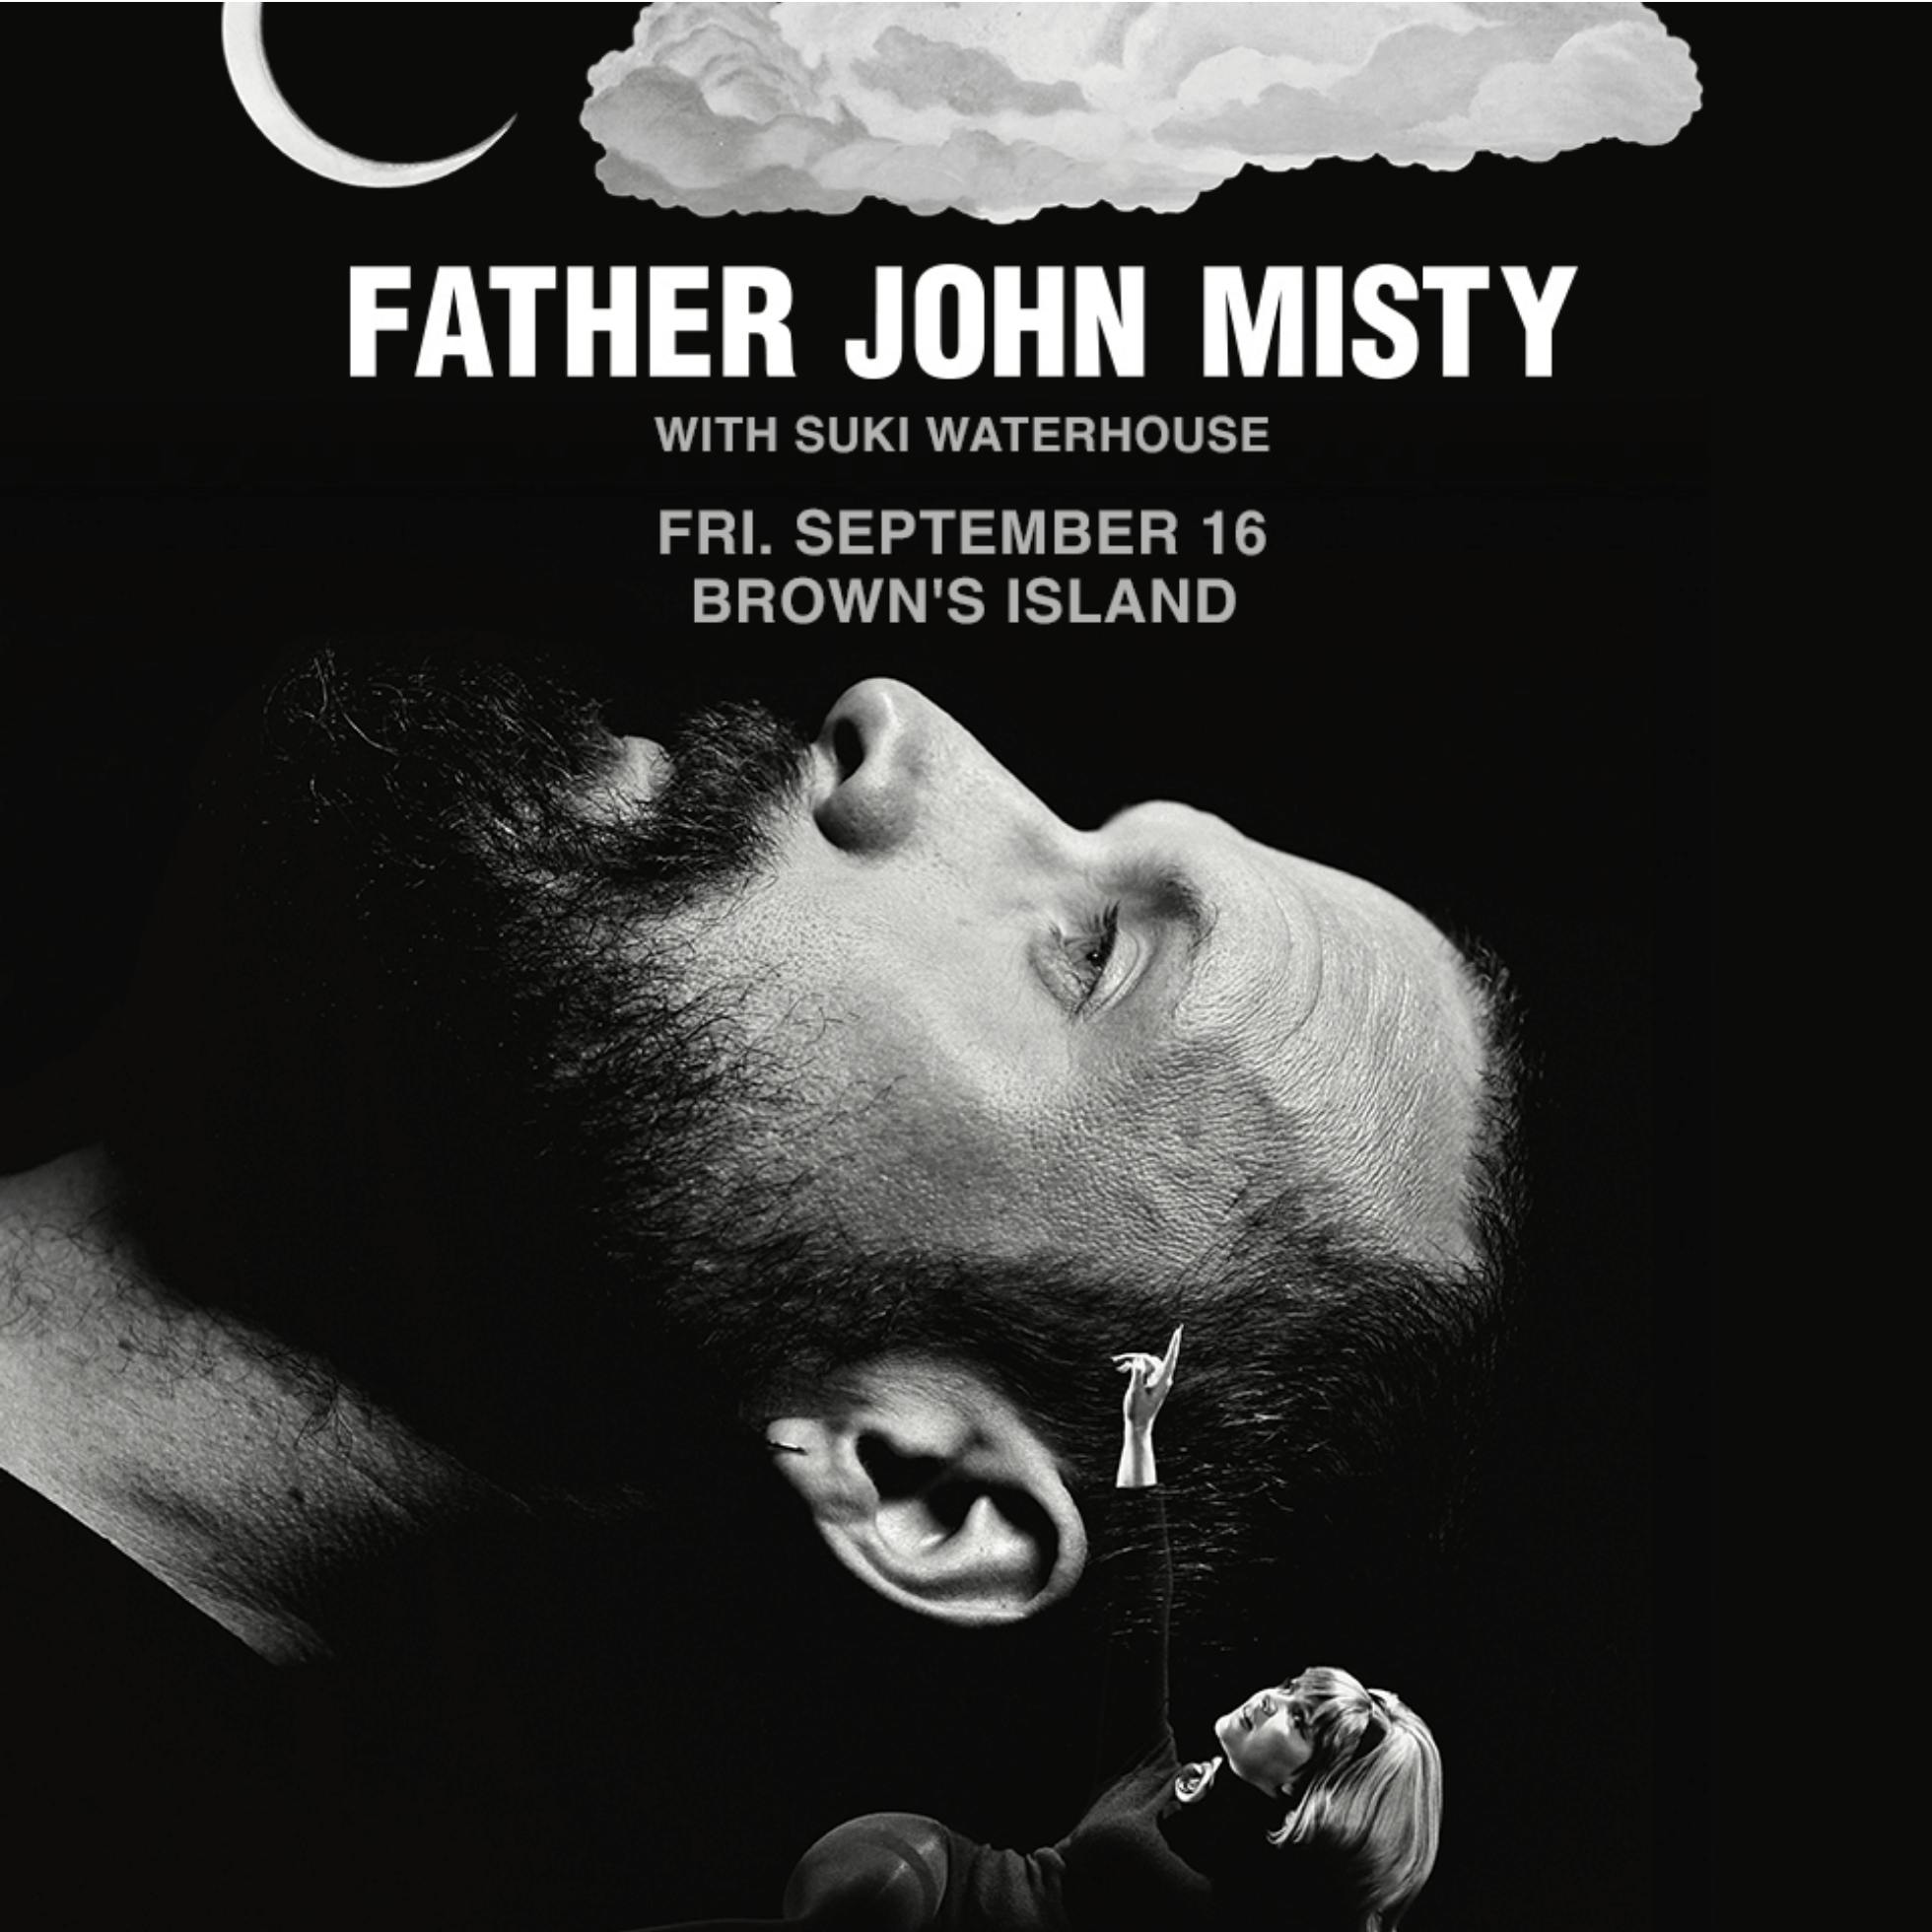 Father John Misty with Suki Waterhouse on Brown's Island